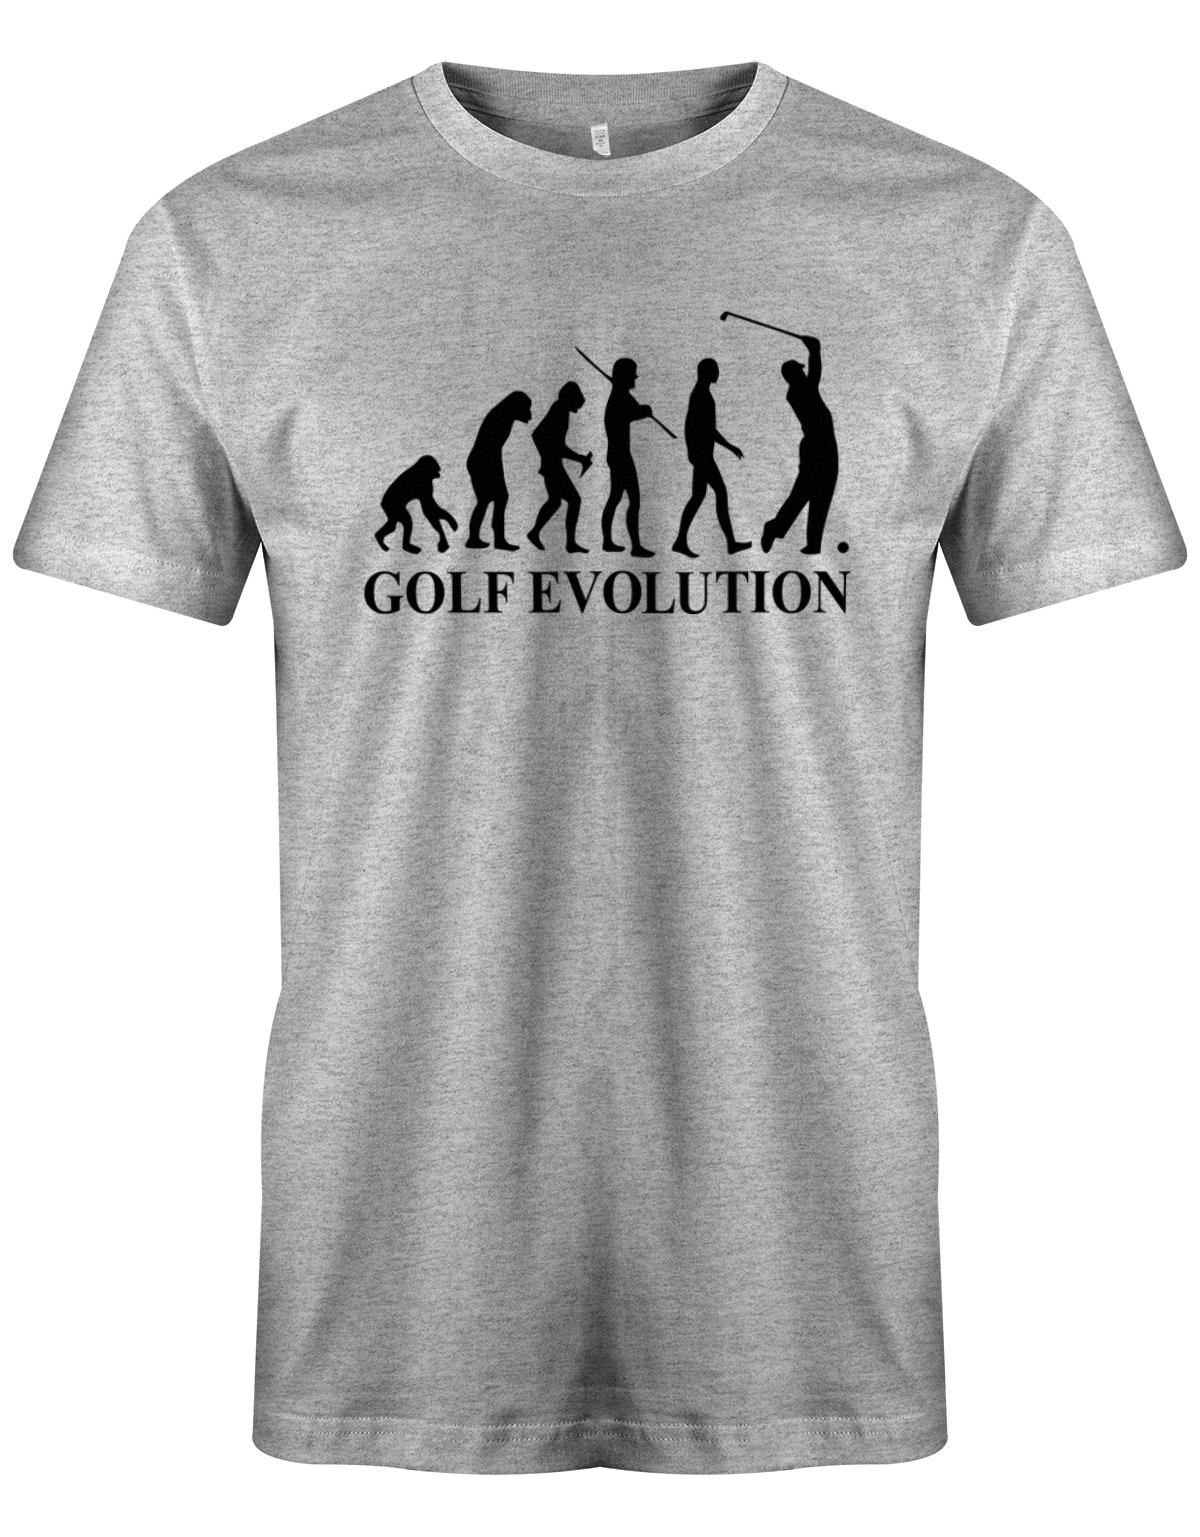 Golf-evolution-Herren-Shirt-Grau